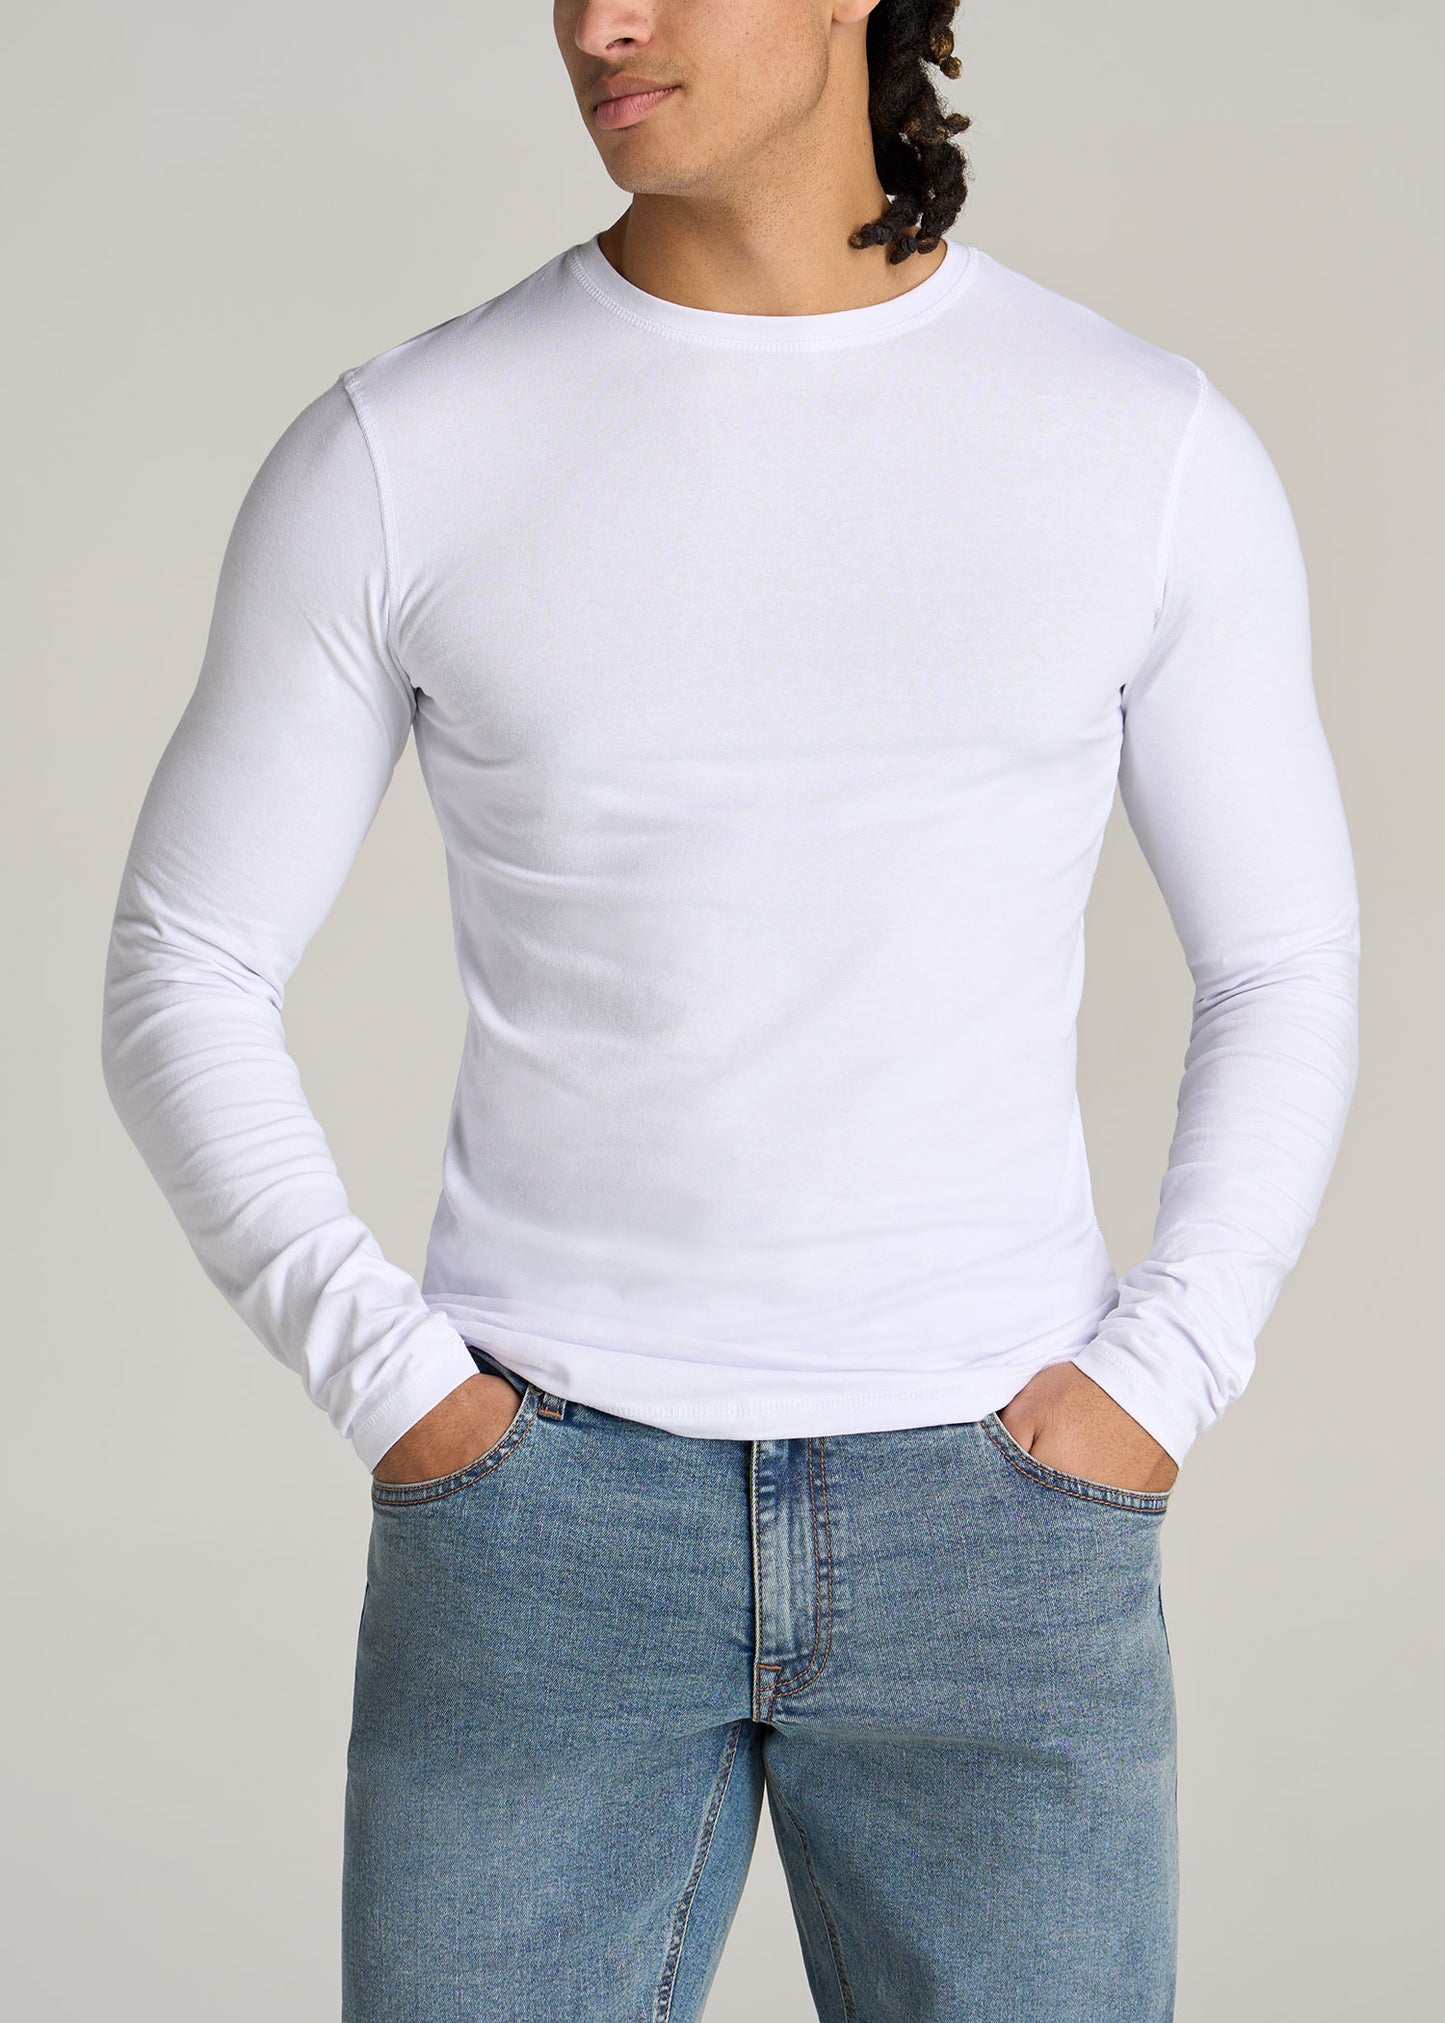 Men's Long Sleeve Shirts, T Shirts & Tops